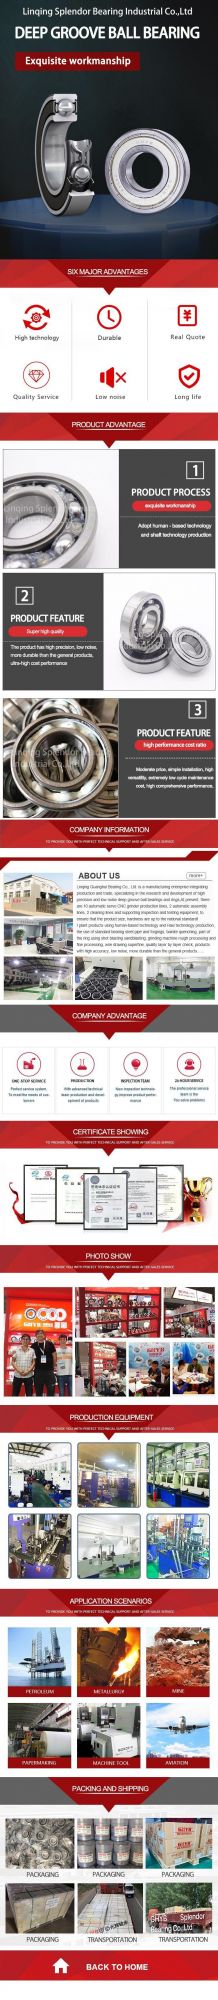 China Factory Distributor Supplier of Deep Groove Ball Bearings for Motors, Compressors, Alternators 6306-2rz/P6/Z2V2